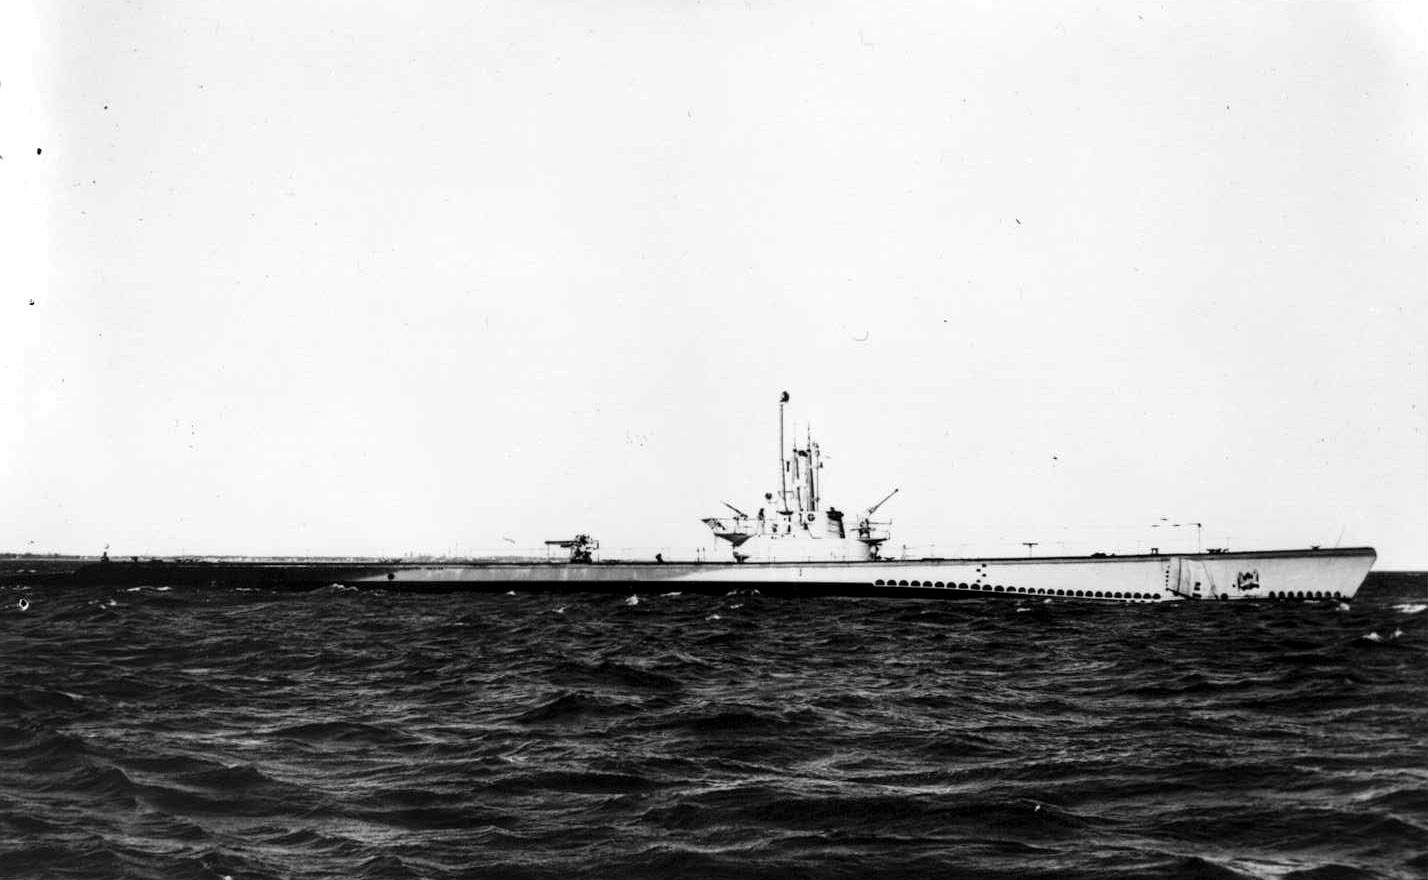 USS Macabi underway on Lake Michigan in the United States, 19 Sep 1944